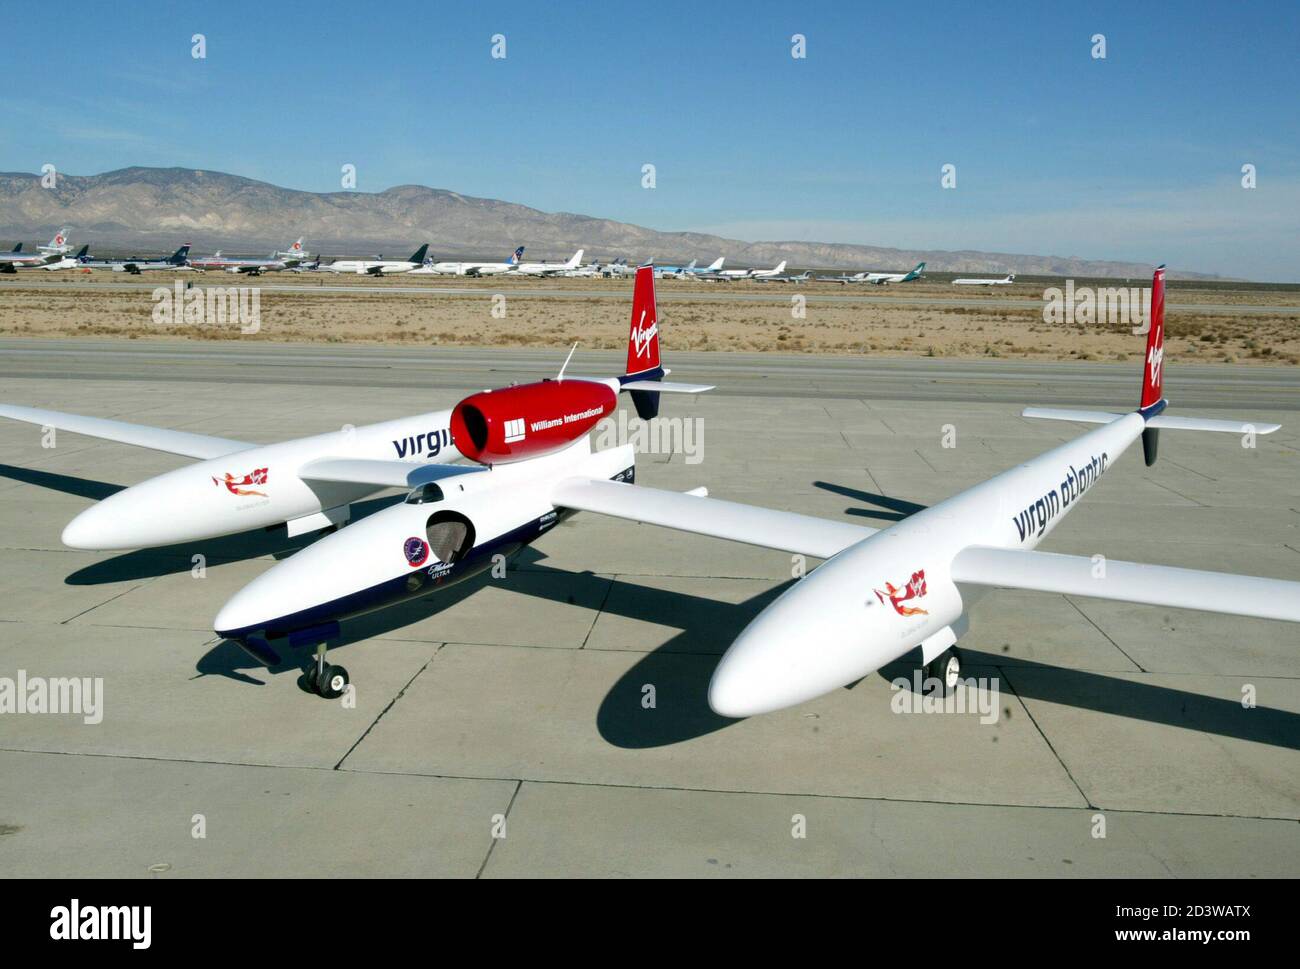 Virgin atlantic globalflyer pilot steve hi-res stock photography and images  - Alamy